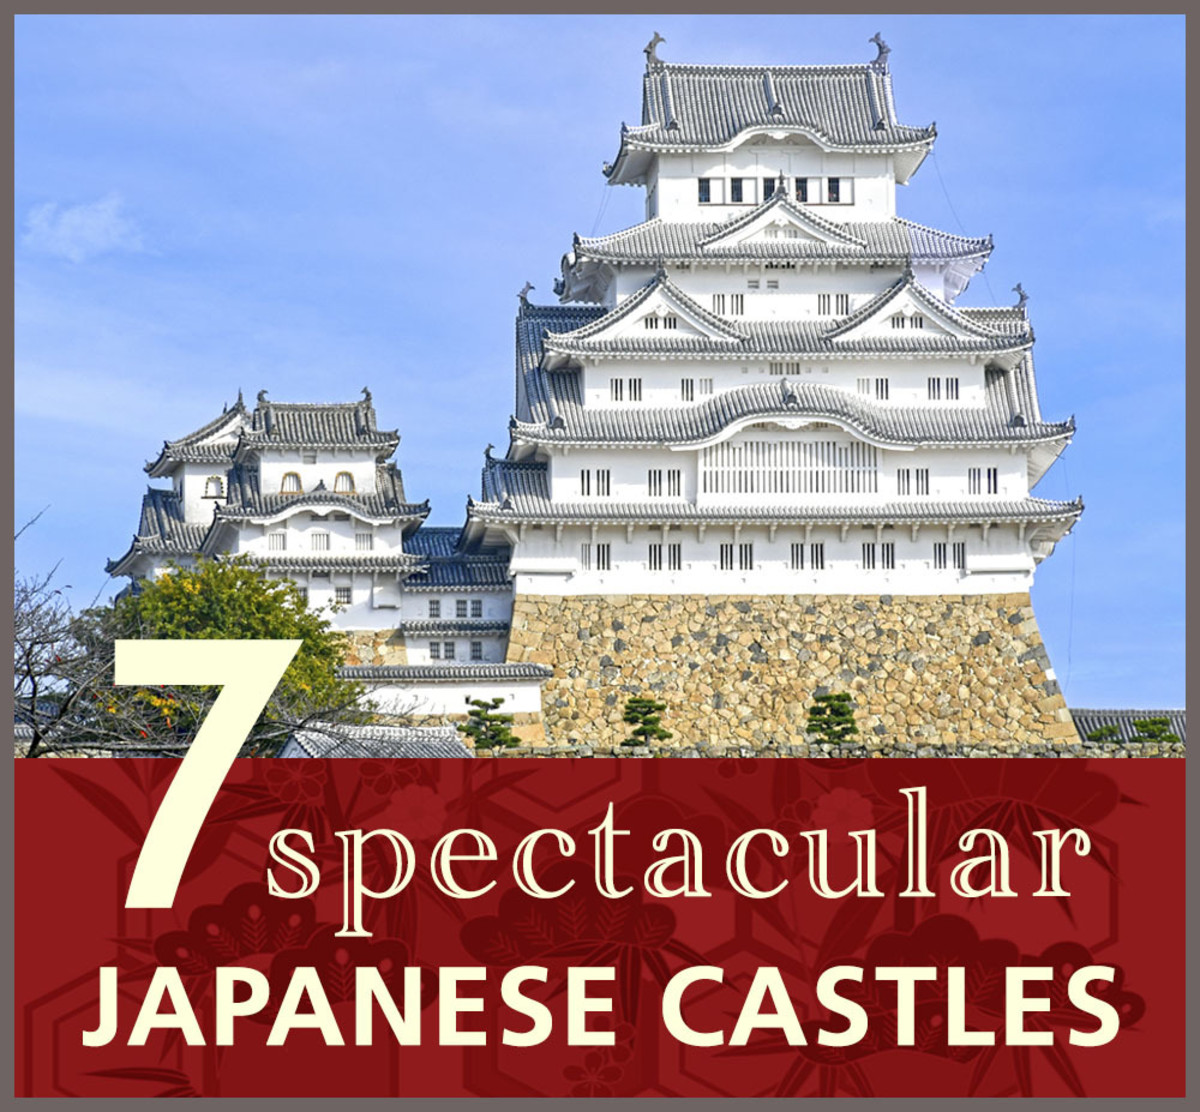 Spectacular Japanese castles. A majestic symbol of medieval Japan.